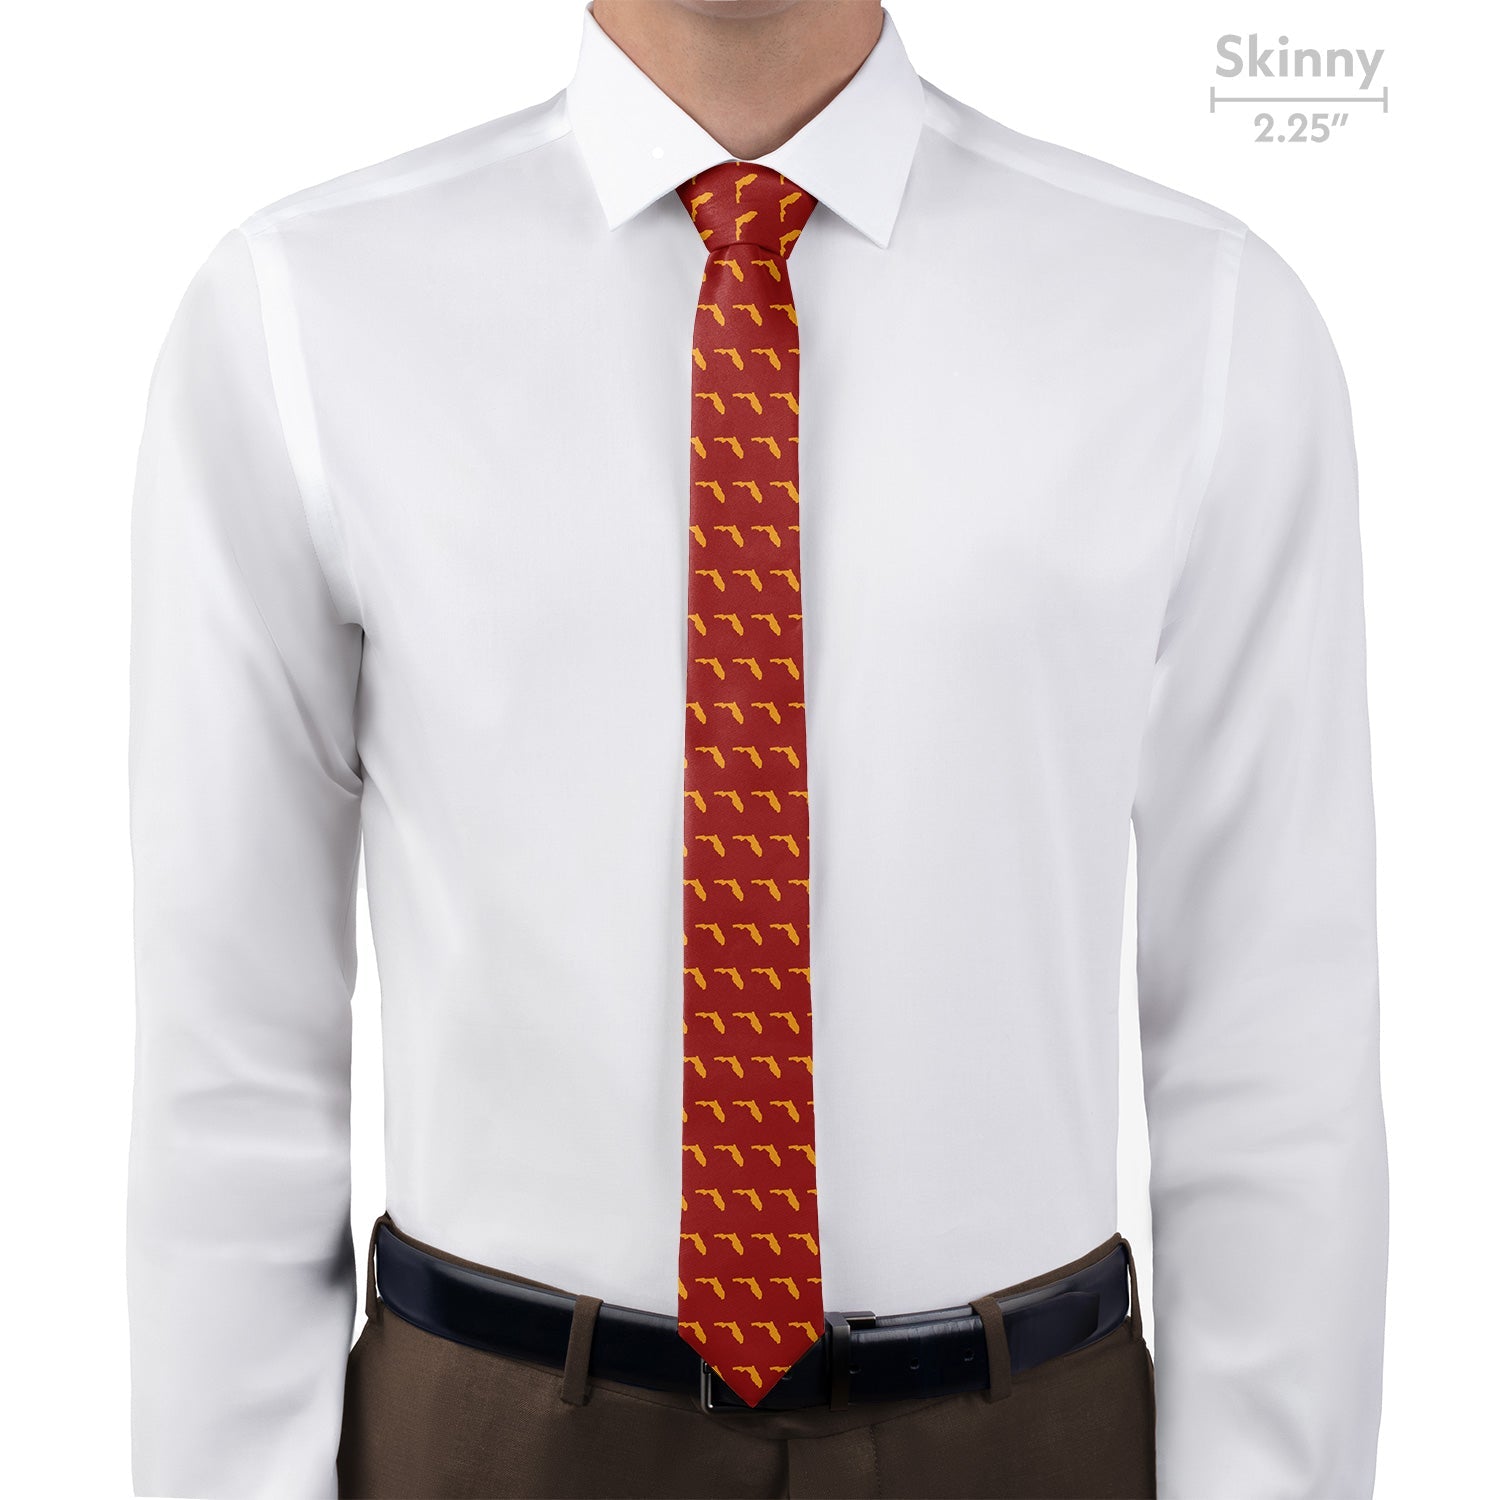 Florida State Outline Necktie - Skinny - Knotty Tie Co.